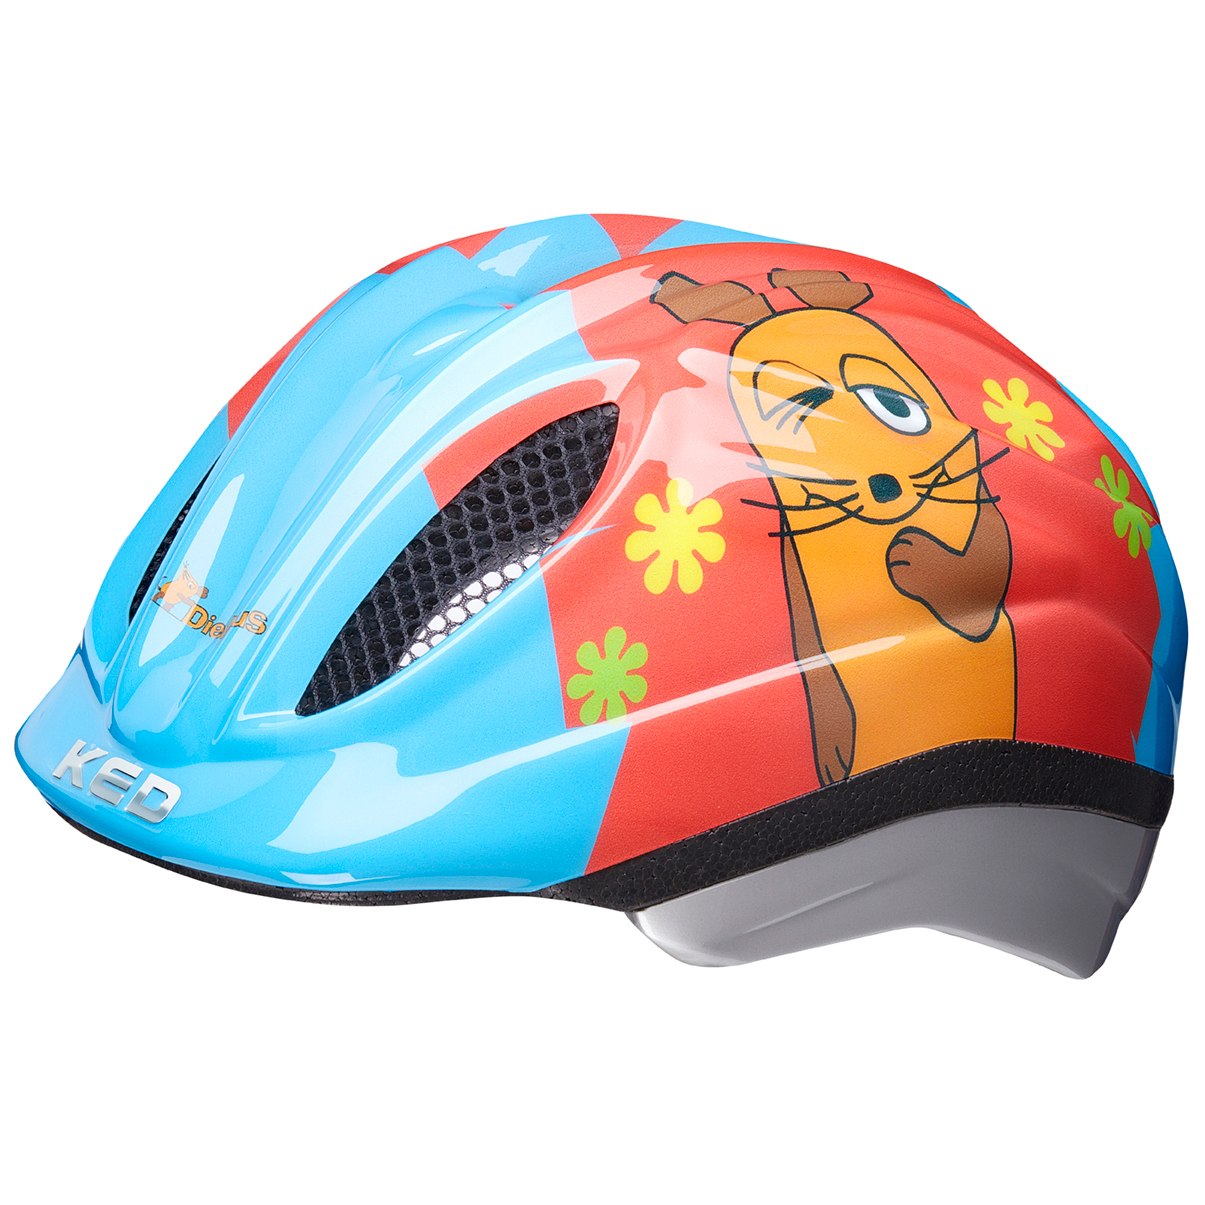 Productfoto van KED Meggy II Originals Helmet - Die Maus